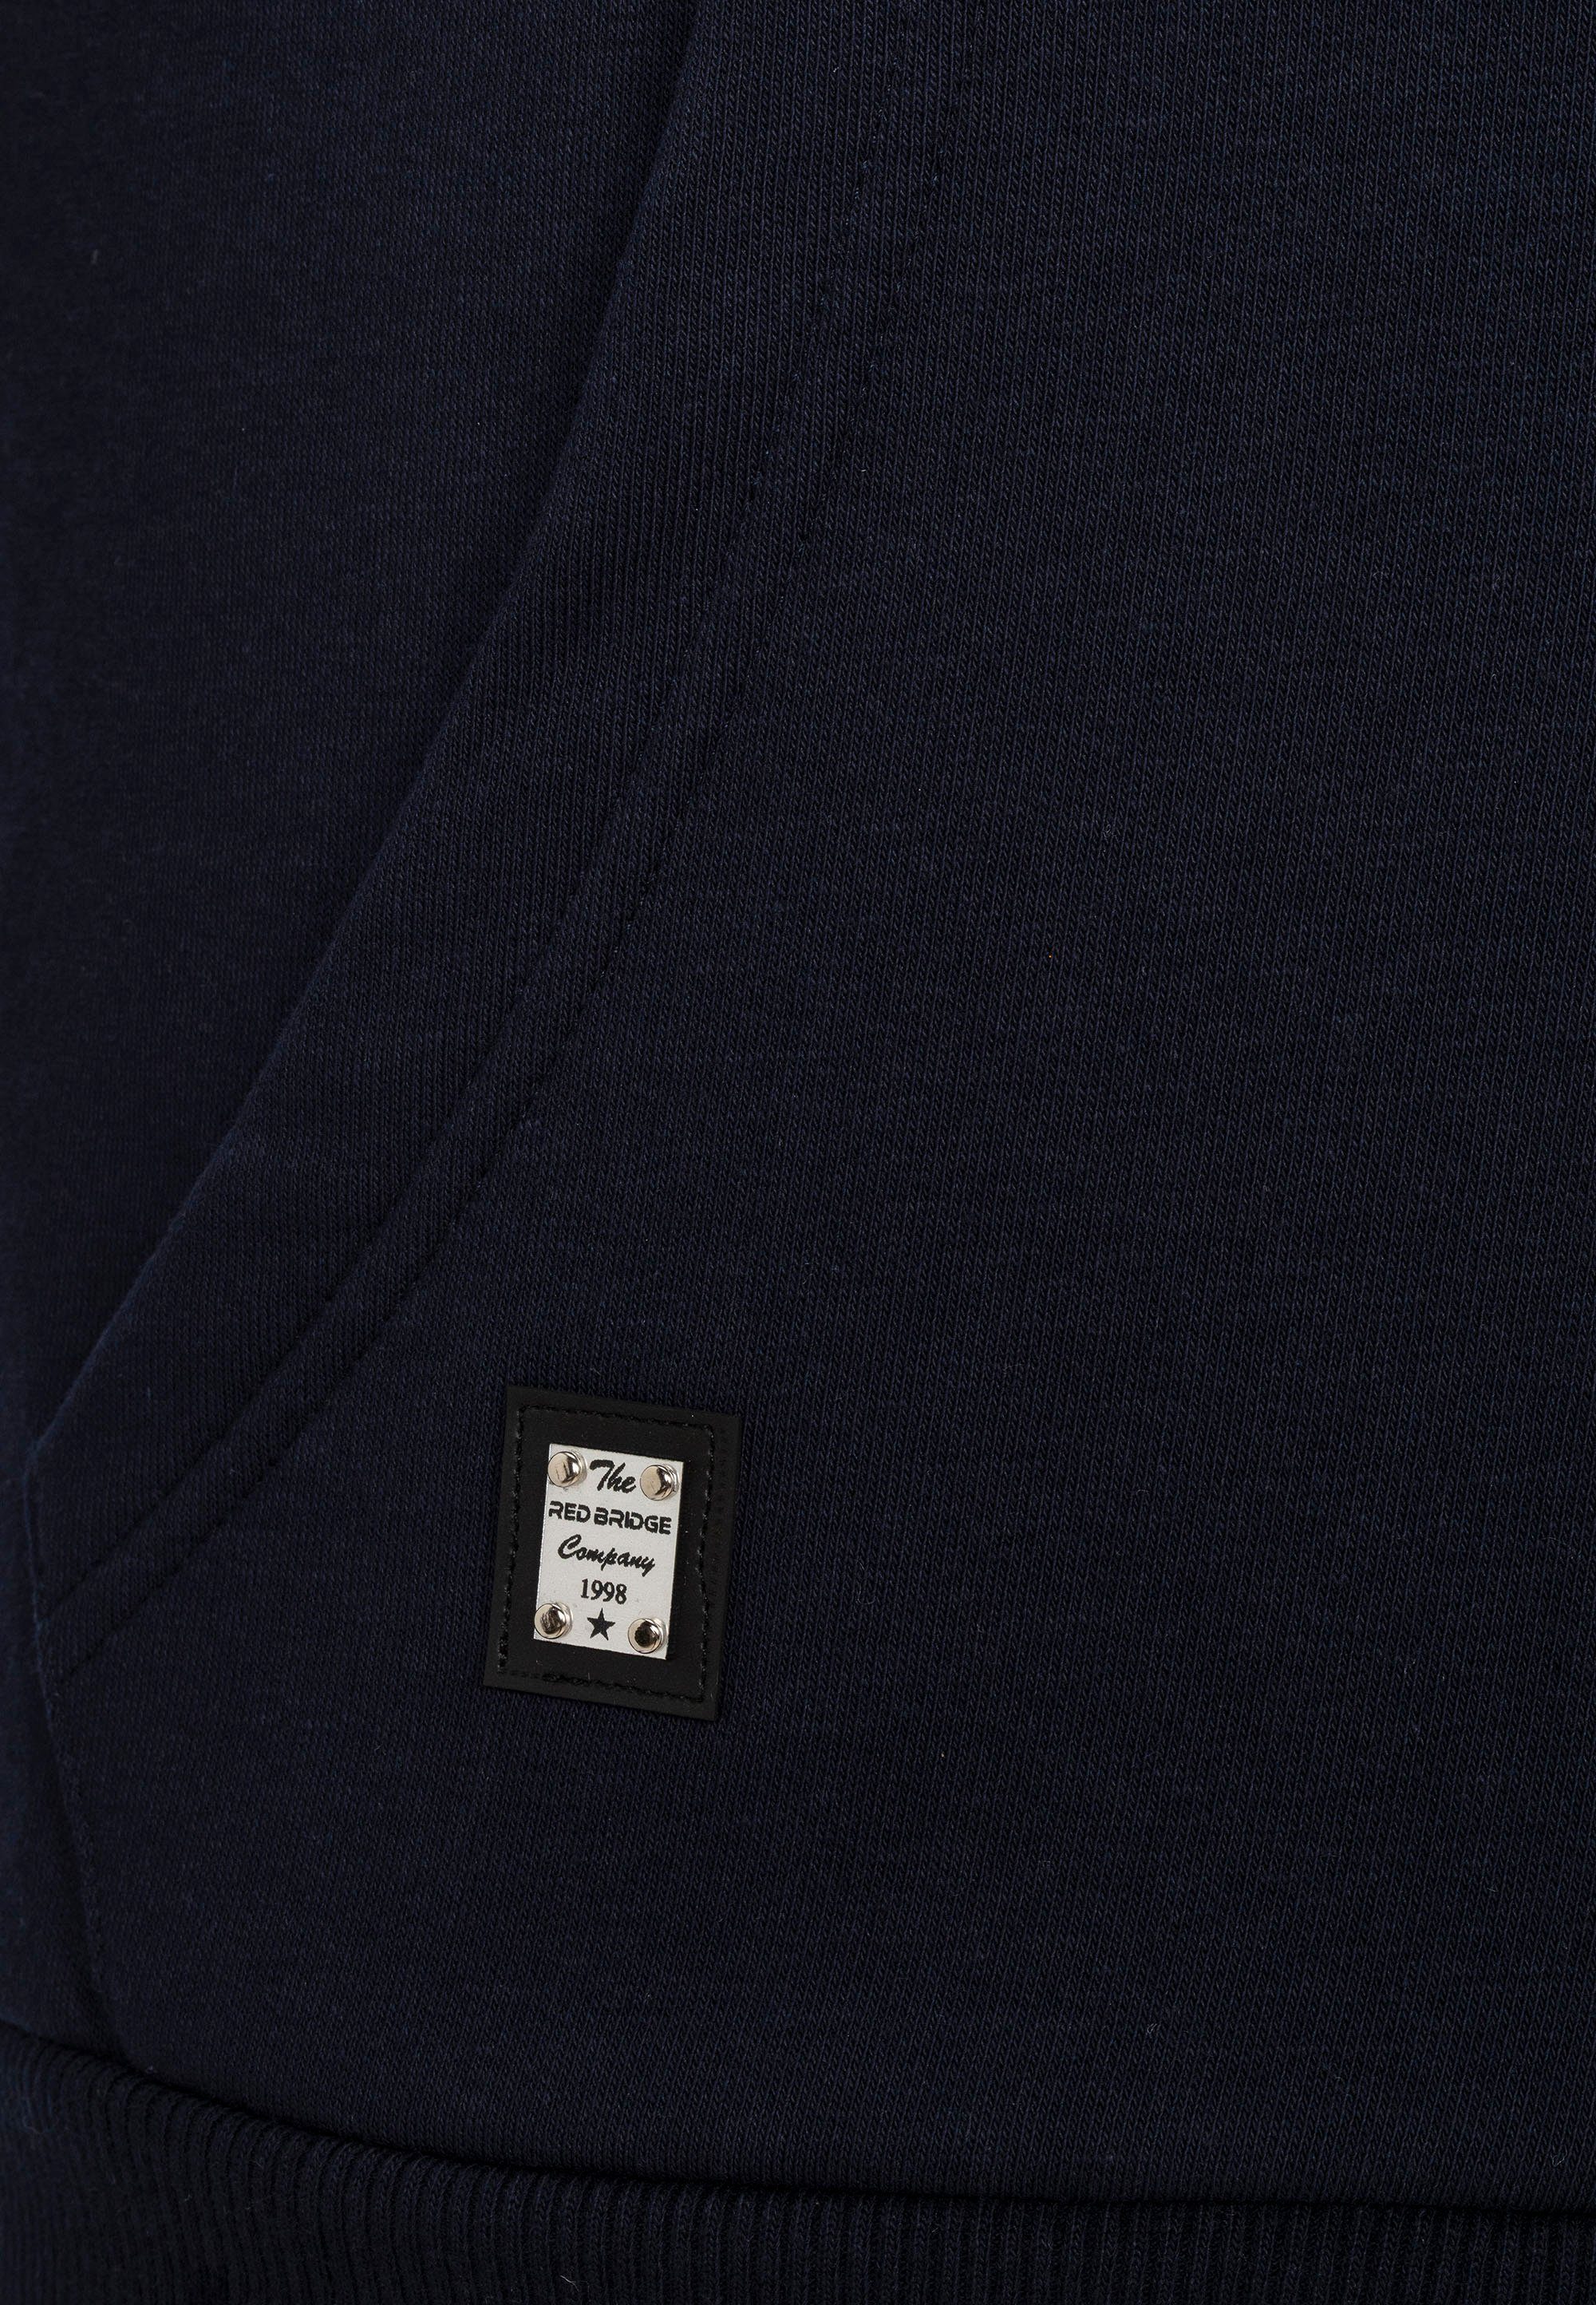 RedBridge Navyblau Logopatch Kapuzensweatjacke mit Premium modisch Sweater vielseitig,